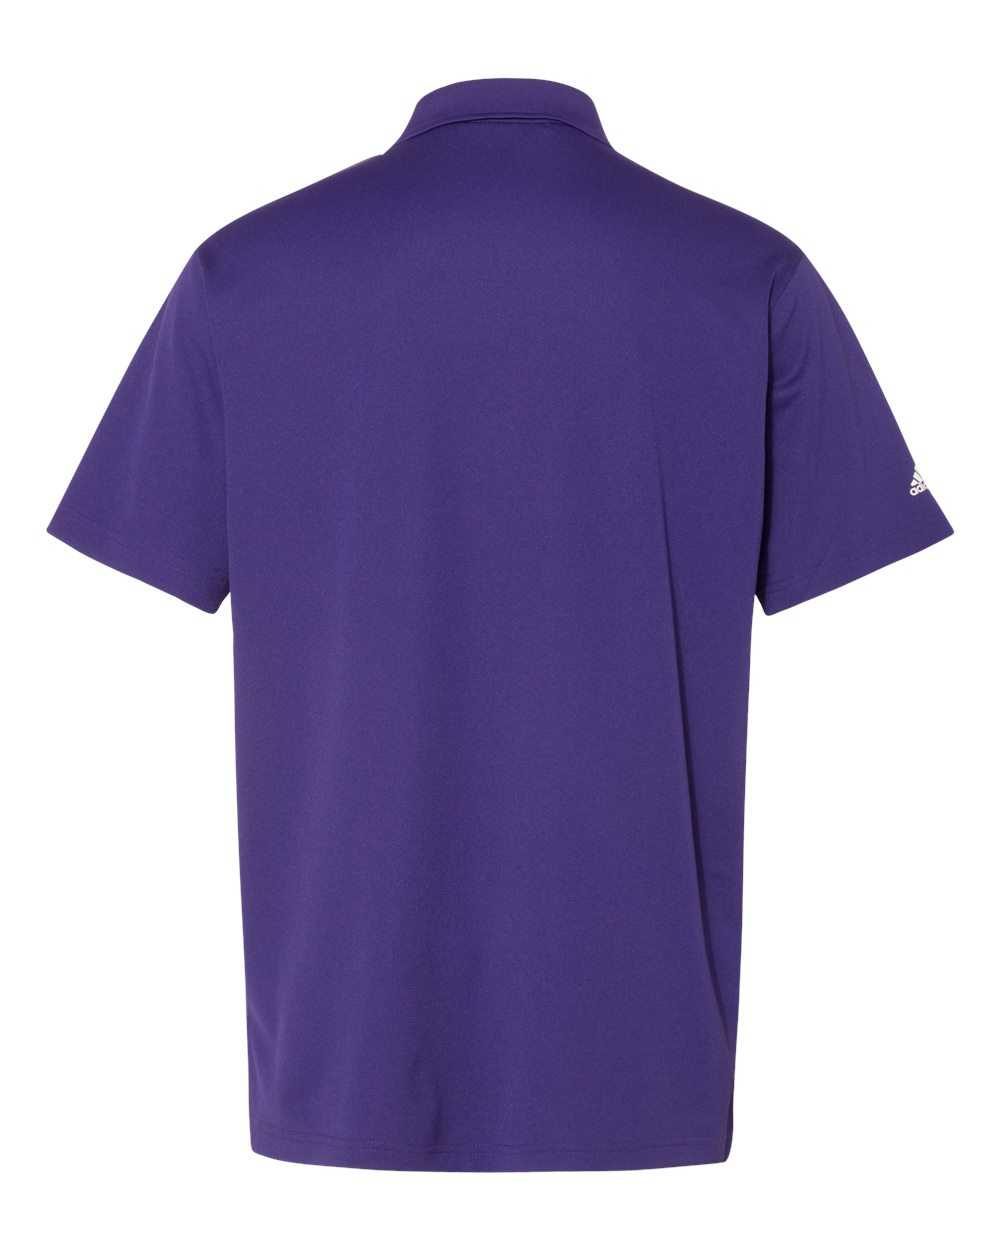 Adidas A130 Basic Sport Shirt - Collegiate Purple White - HIT a Double